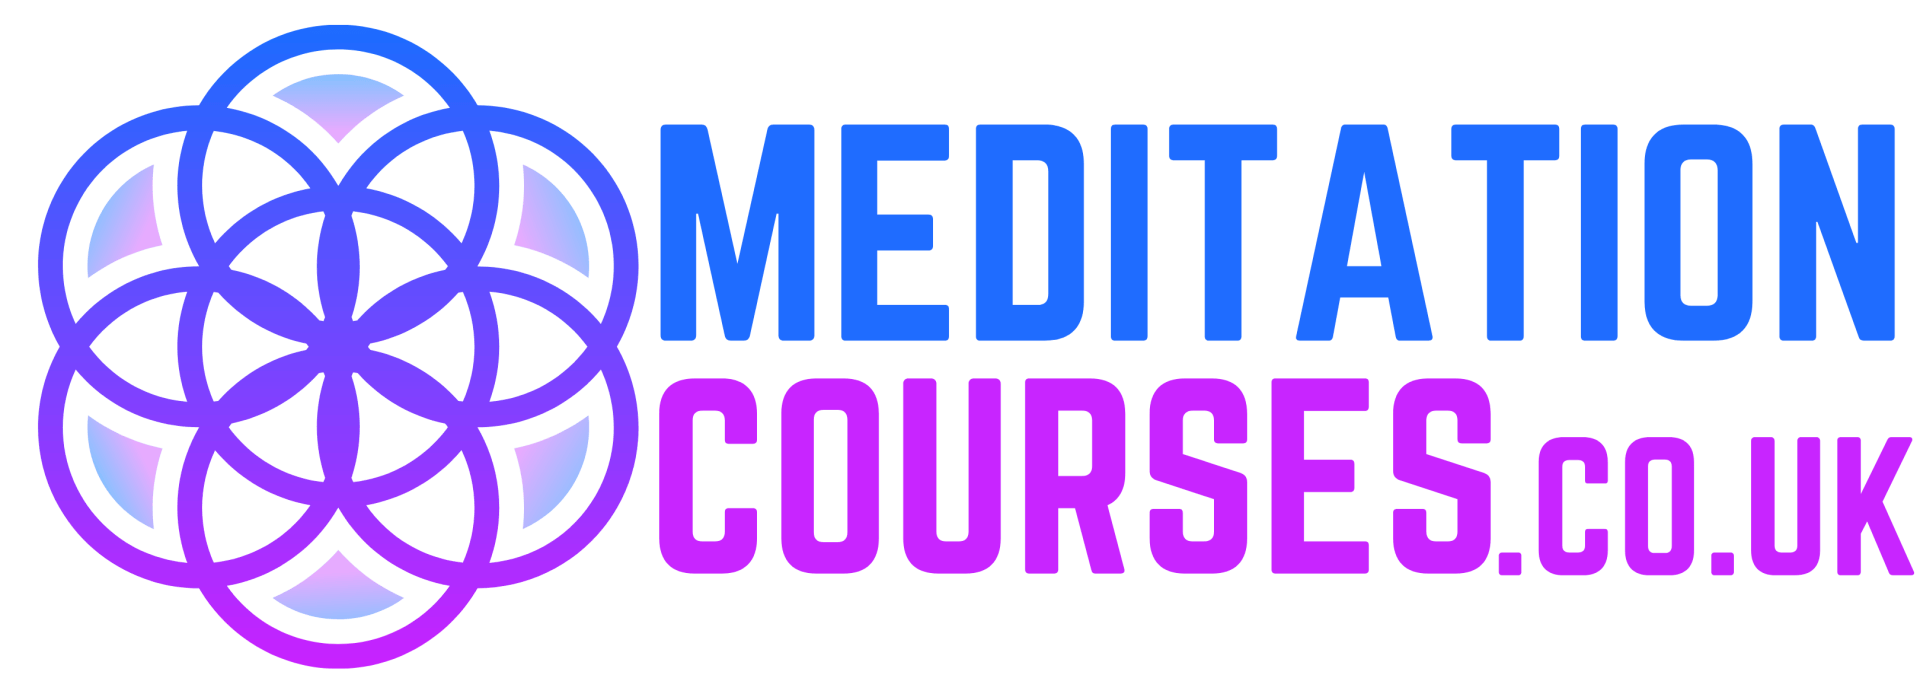 Meditation Courses